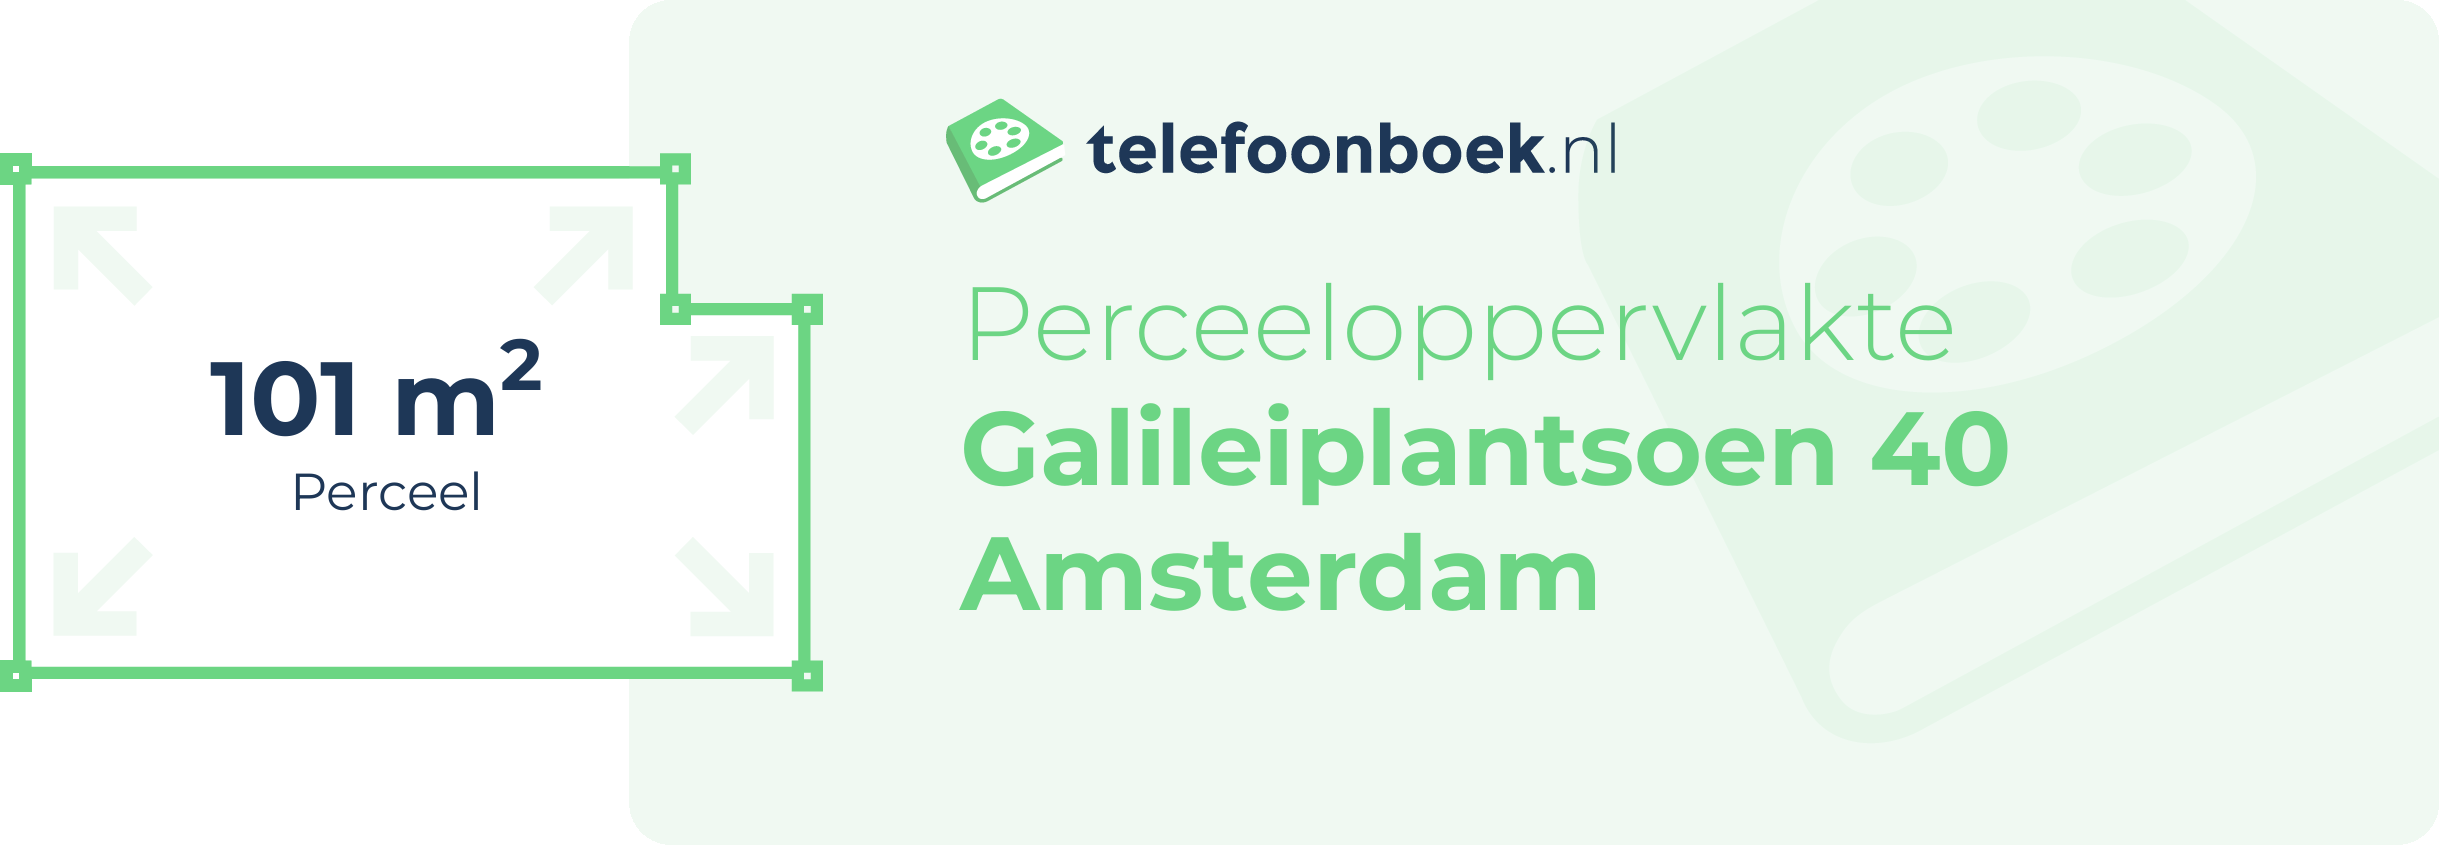 Perceeloppervlakte Galileiplantsoen 40 Amsterdam